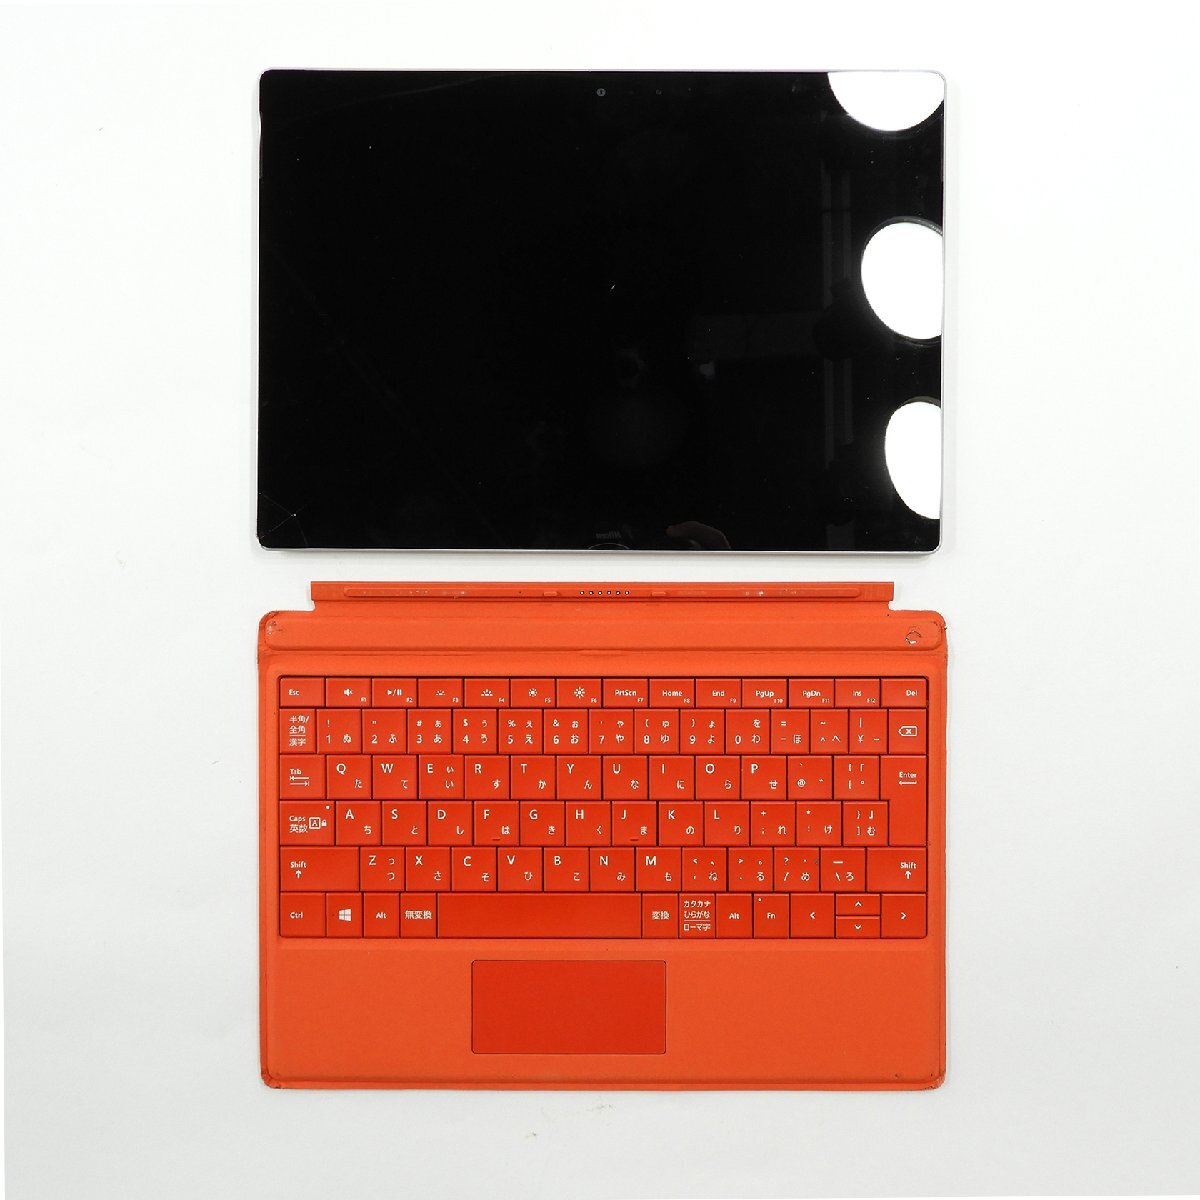 Microsoft Surface 3 128GB 1657 Atom x7-Z8700 1.6GHz 4GB 10.8インチ キーボードカバー付き ジャンク品 #18080 タブレットの画像1